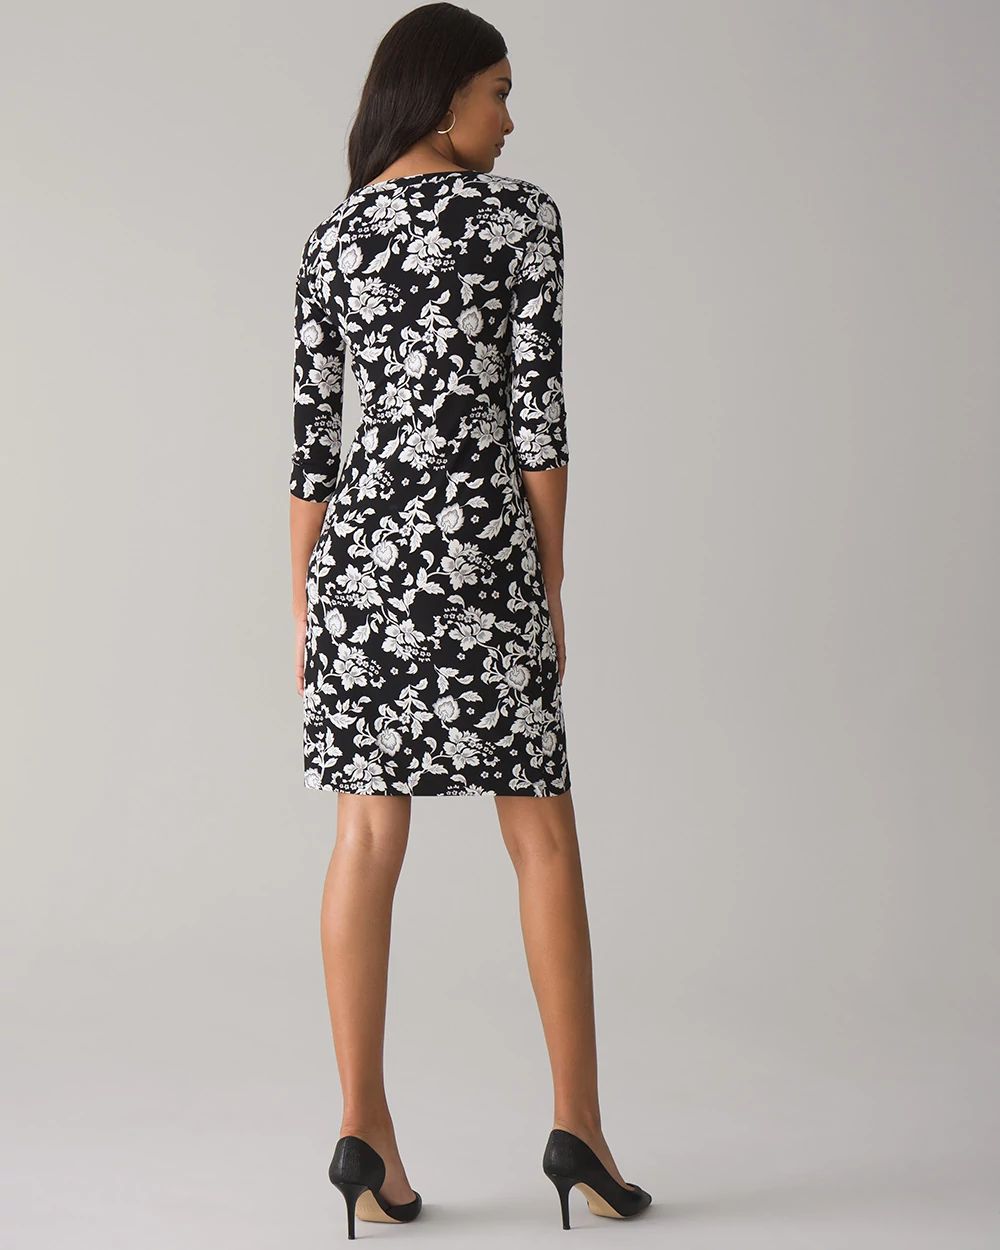 Long-Sleeve Matte Jersey Shirt Dress click to view larger image.